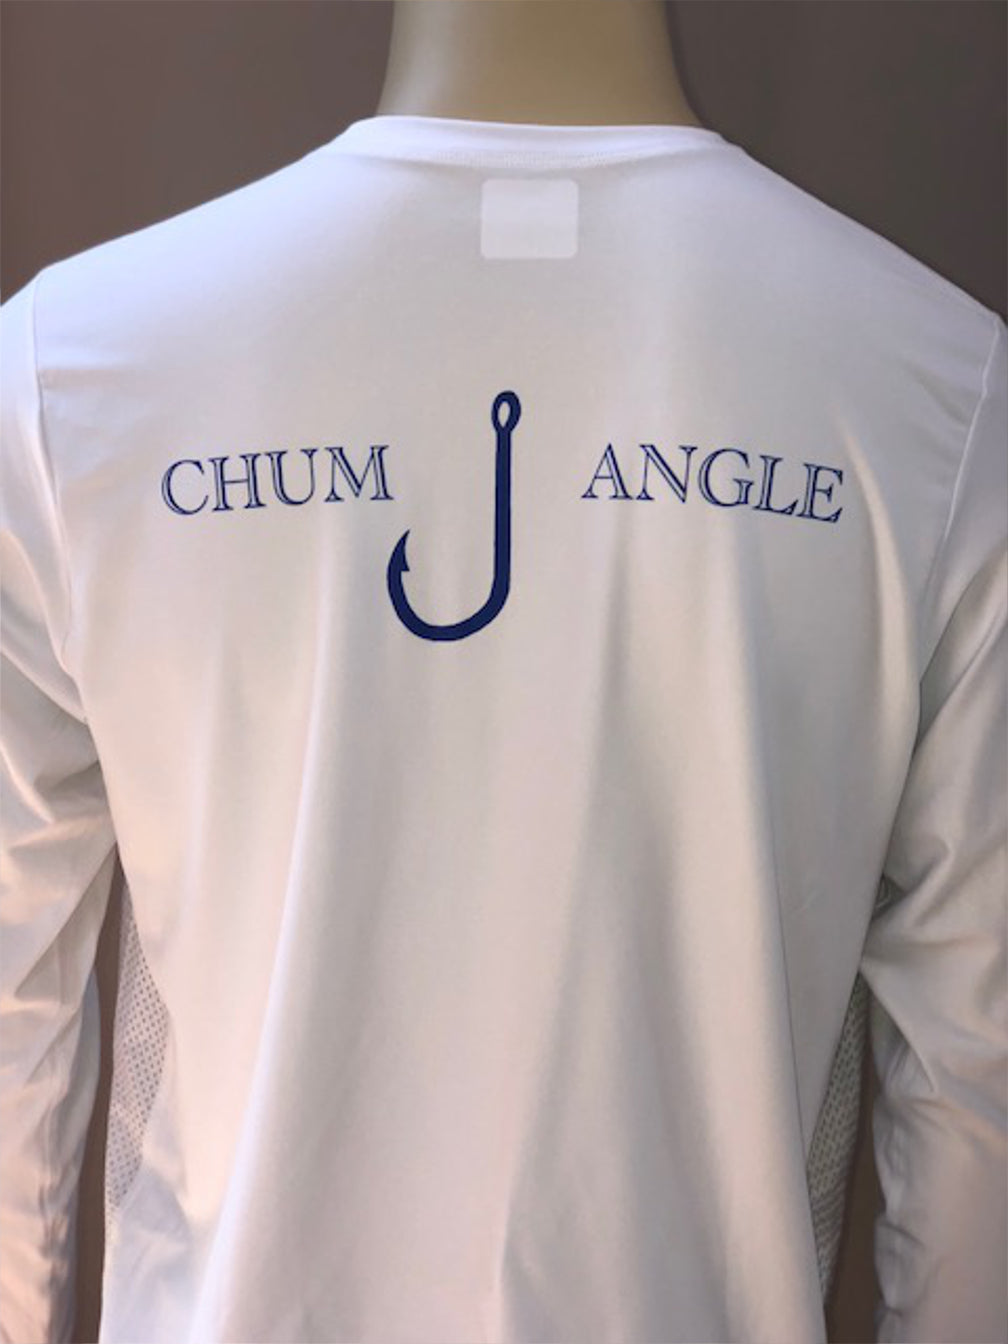 Mens Chum Angle SPF/Rash Guard Shirt